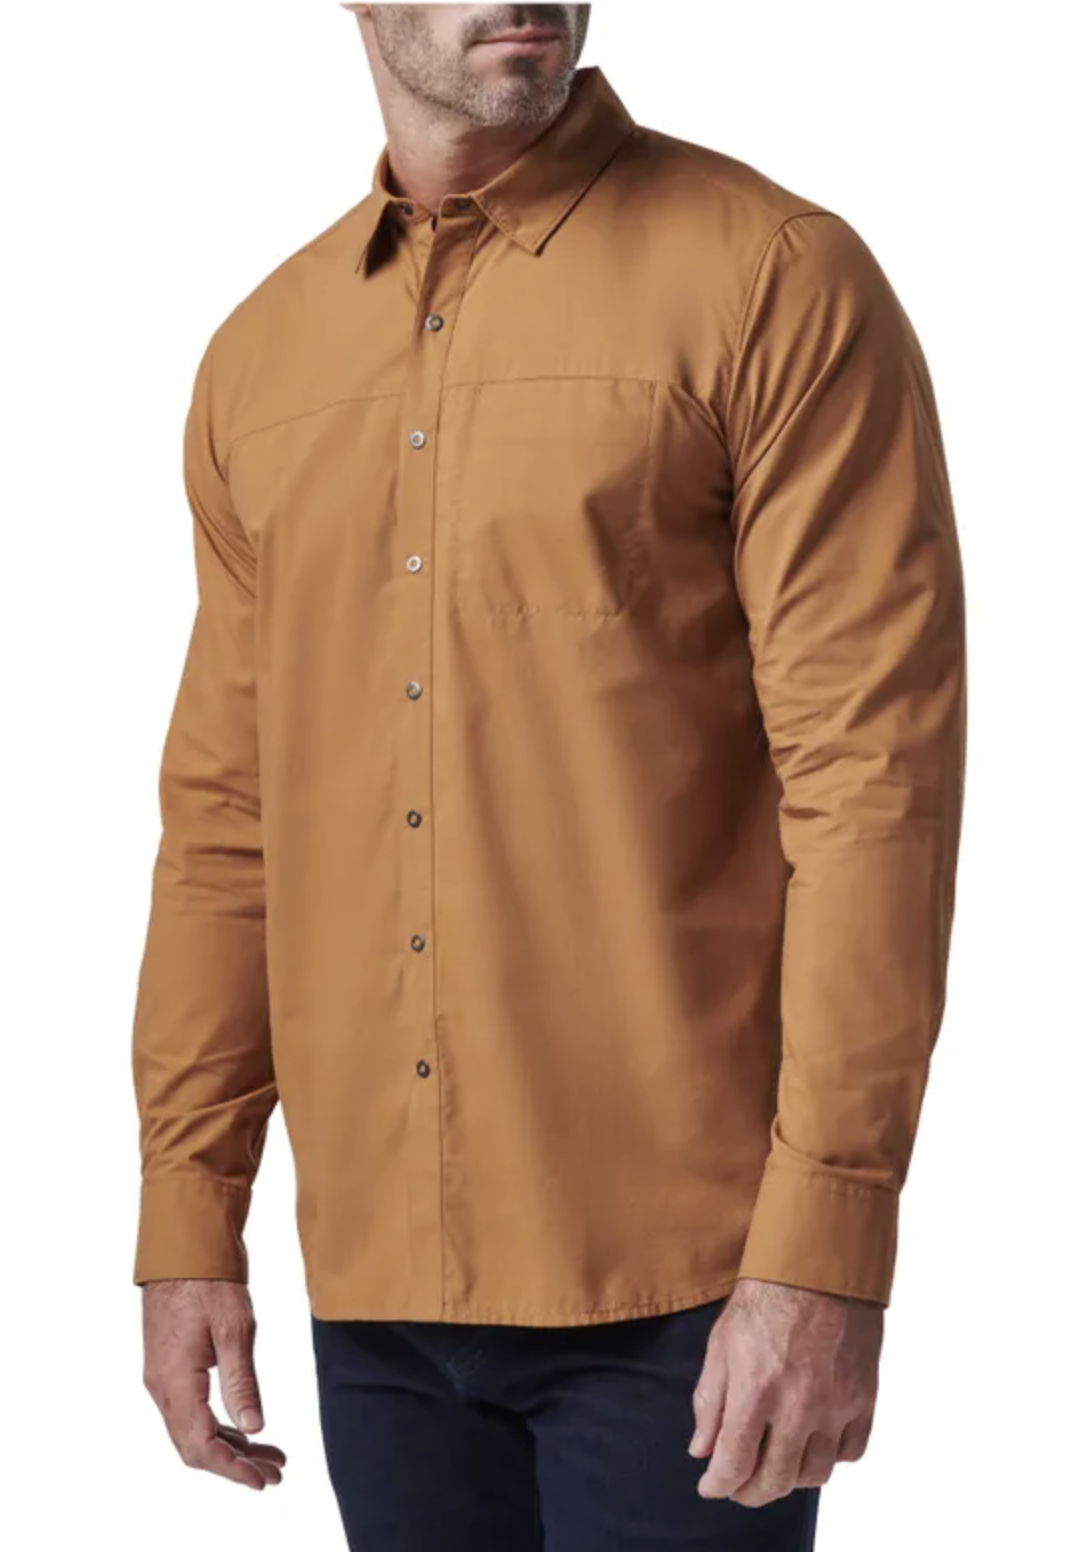 5.11 - Igor Solid Long Sleeve Shirt - Brown Duck (080)